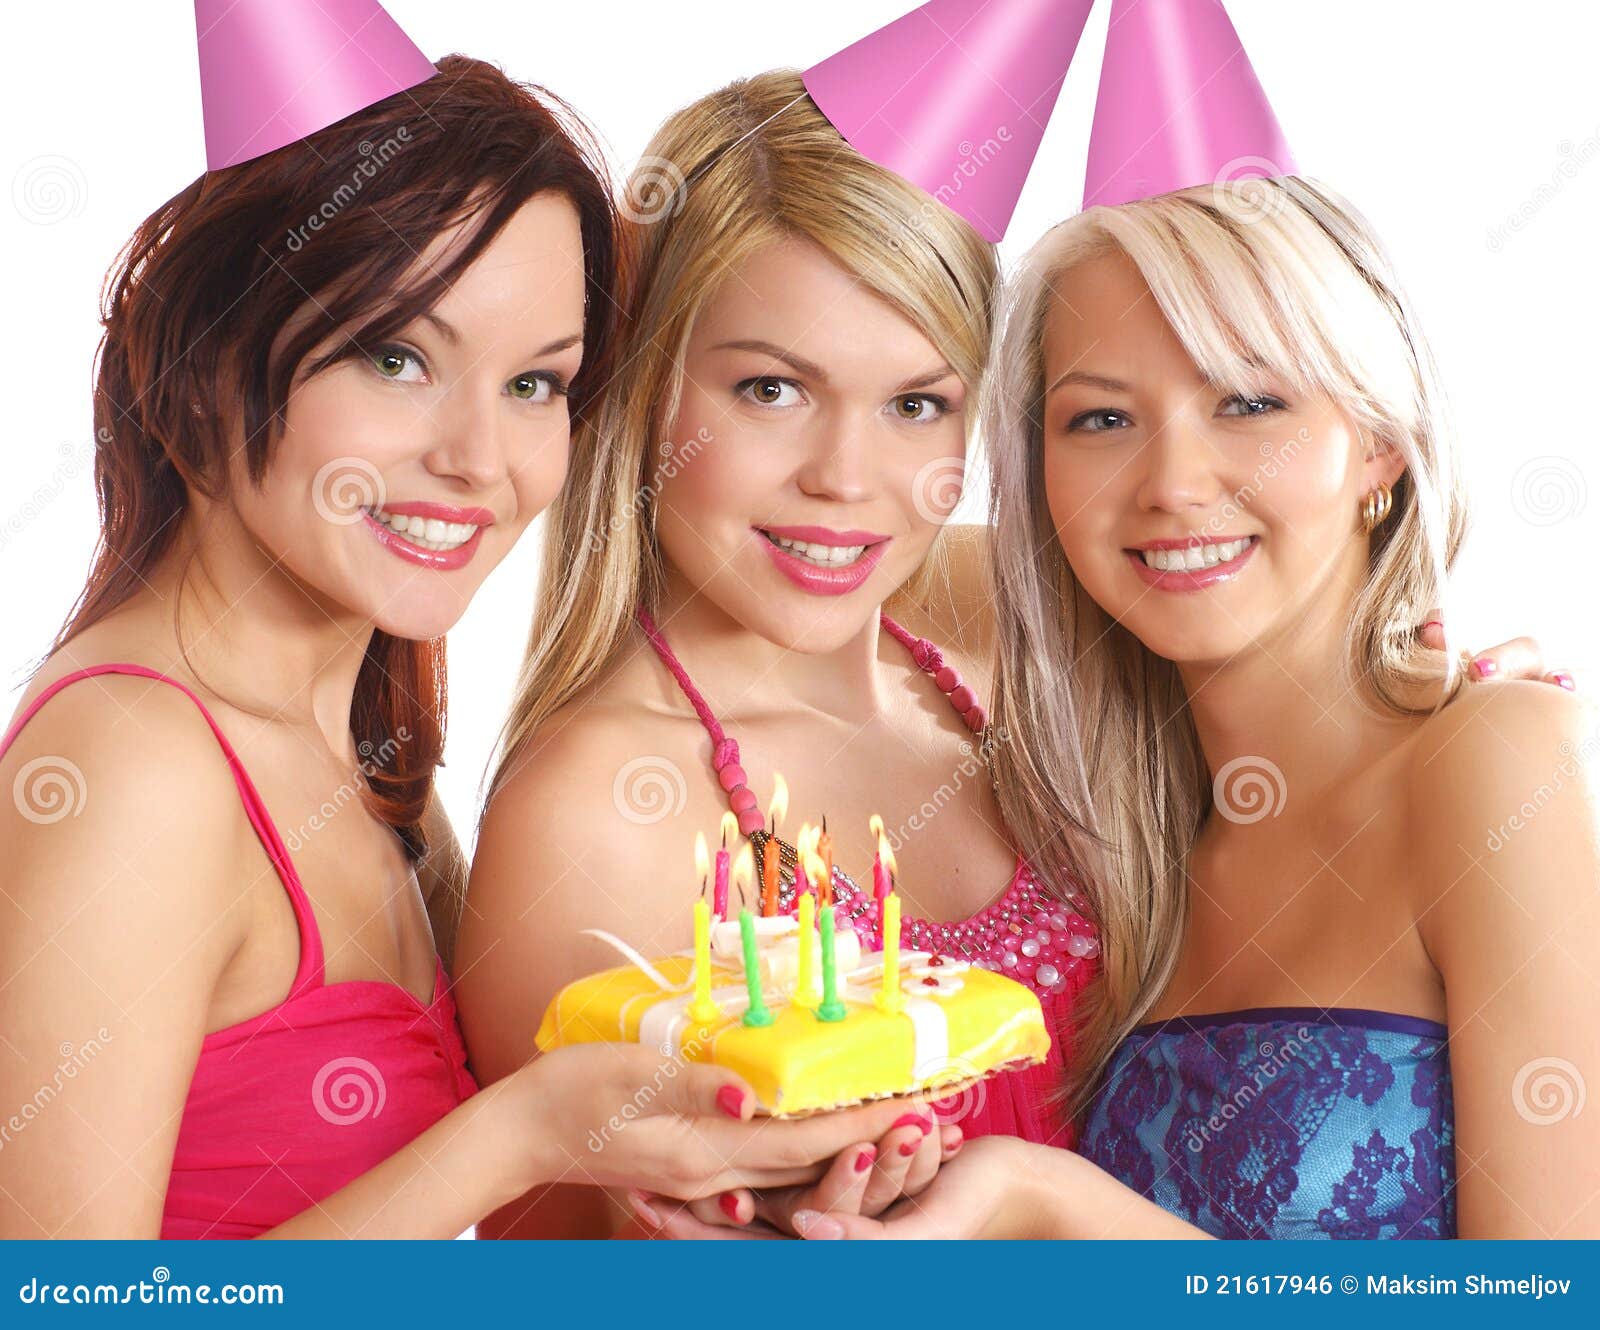 three-young-women-celebrating-birthday-21617946.jpg